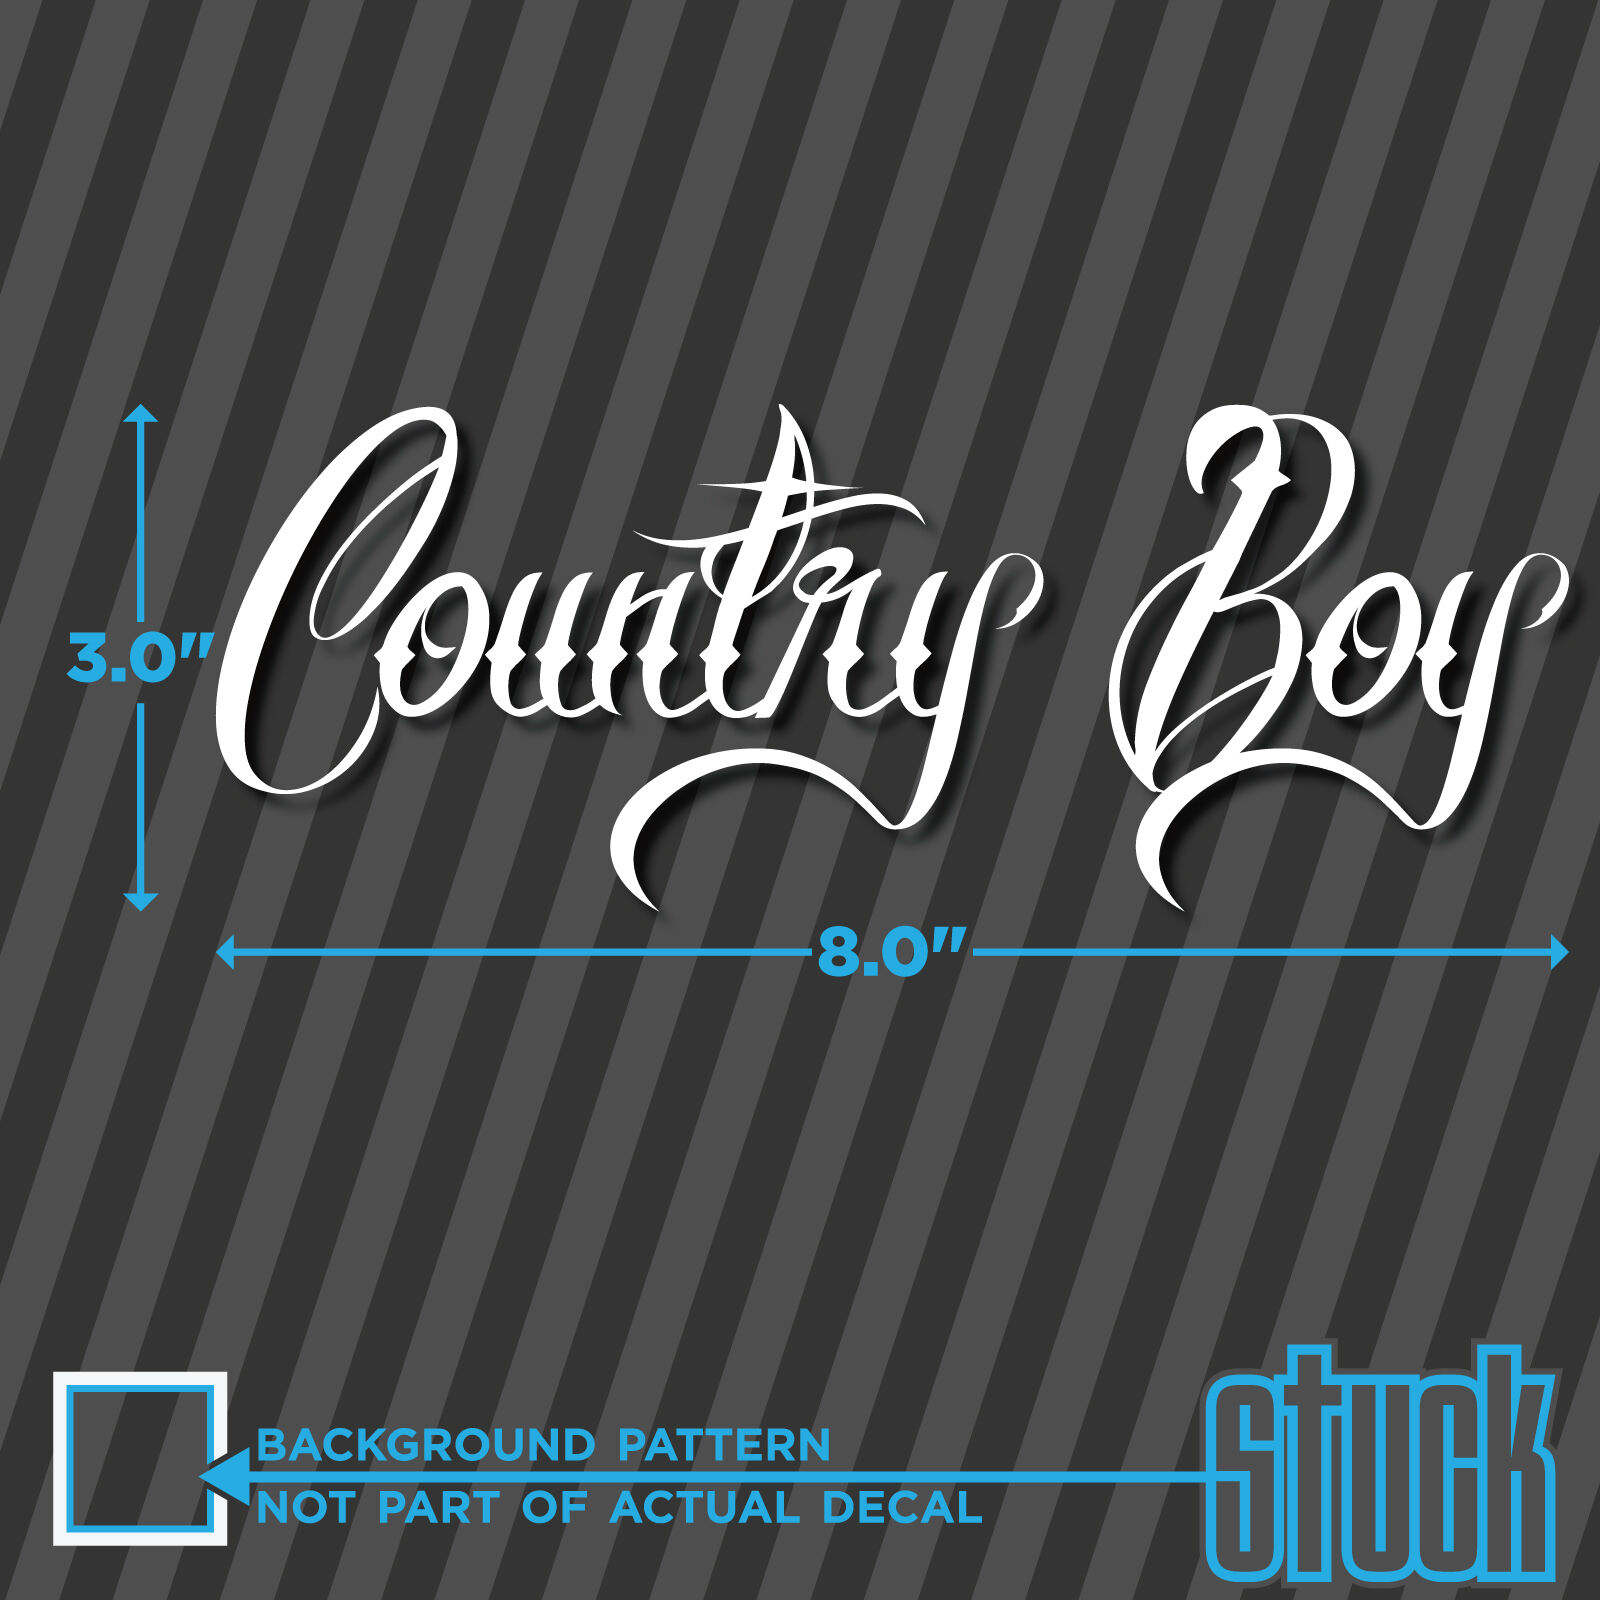 Country Boy - vinyl decal sticker man music cowboy windshield bumper rebel